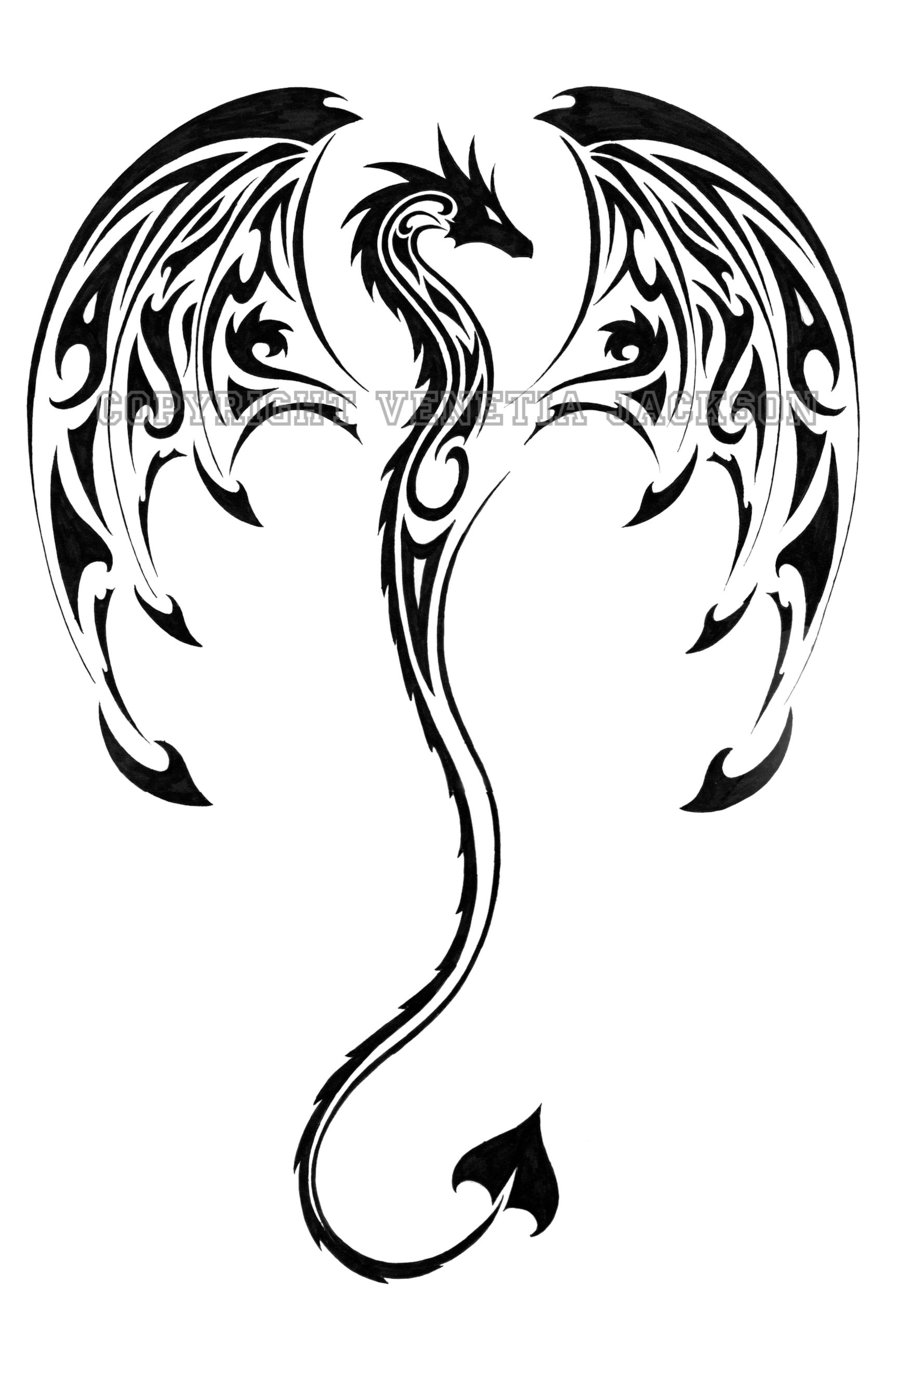 Black Tribal Dragon Tattoo Design by Corpsedragon